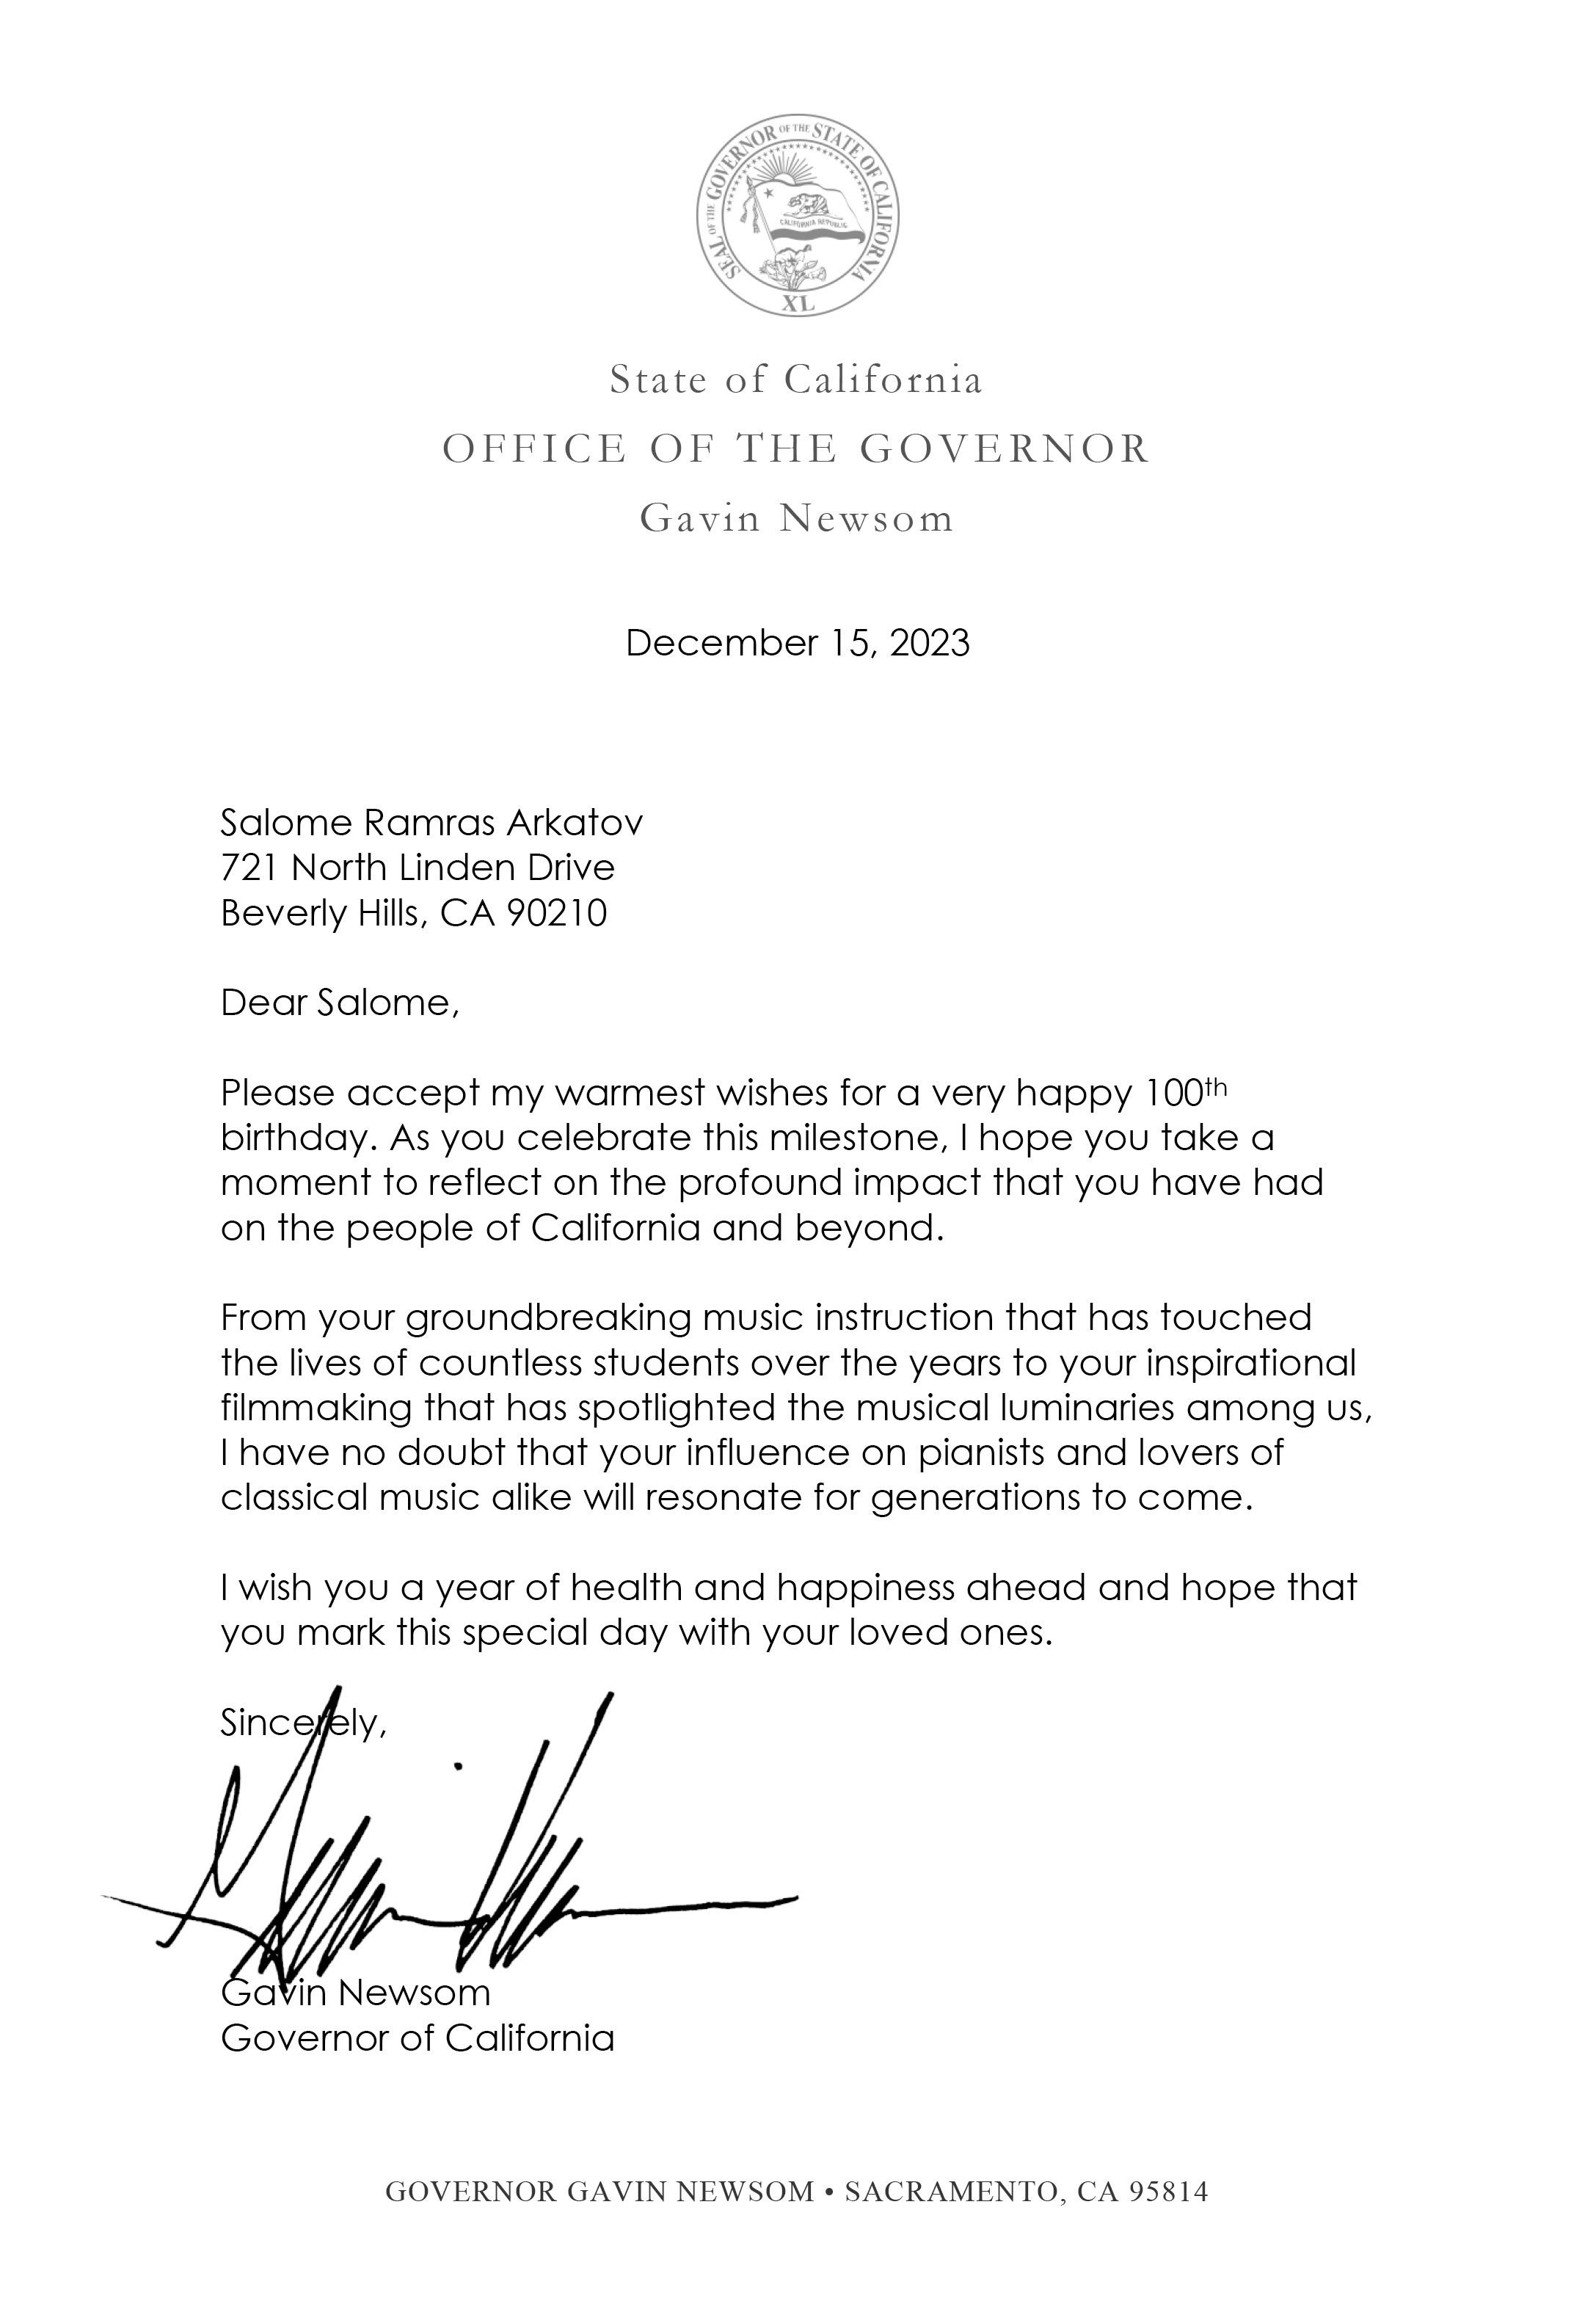 Proclamation from Gavin Newsom, Governor of California